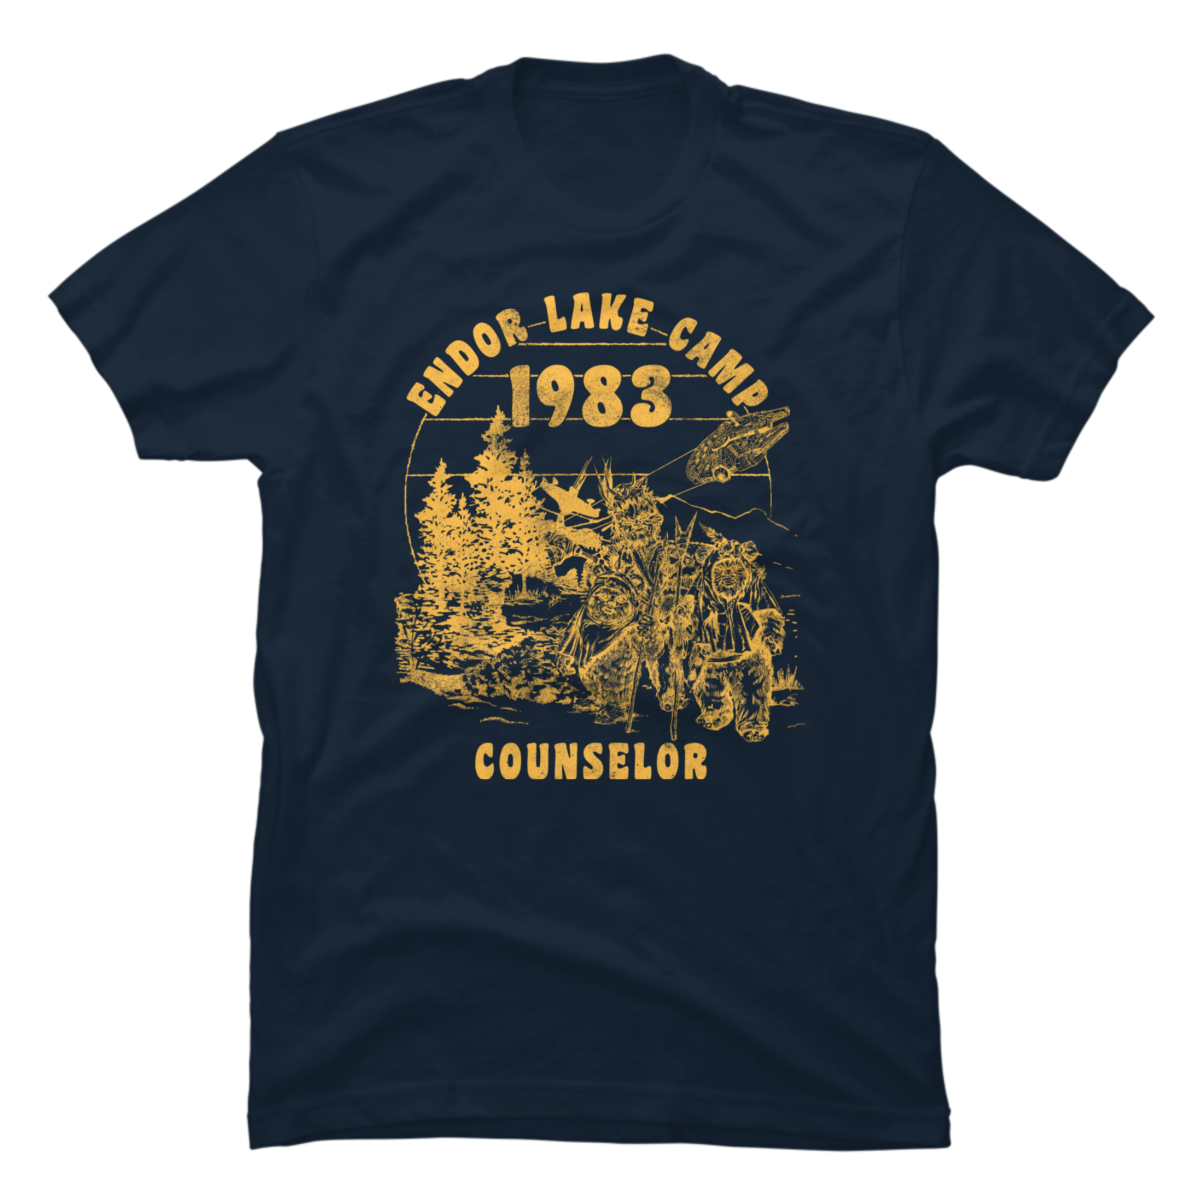 camp counselor t shirts